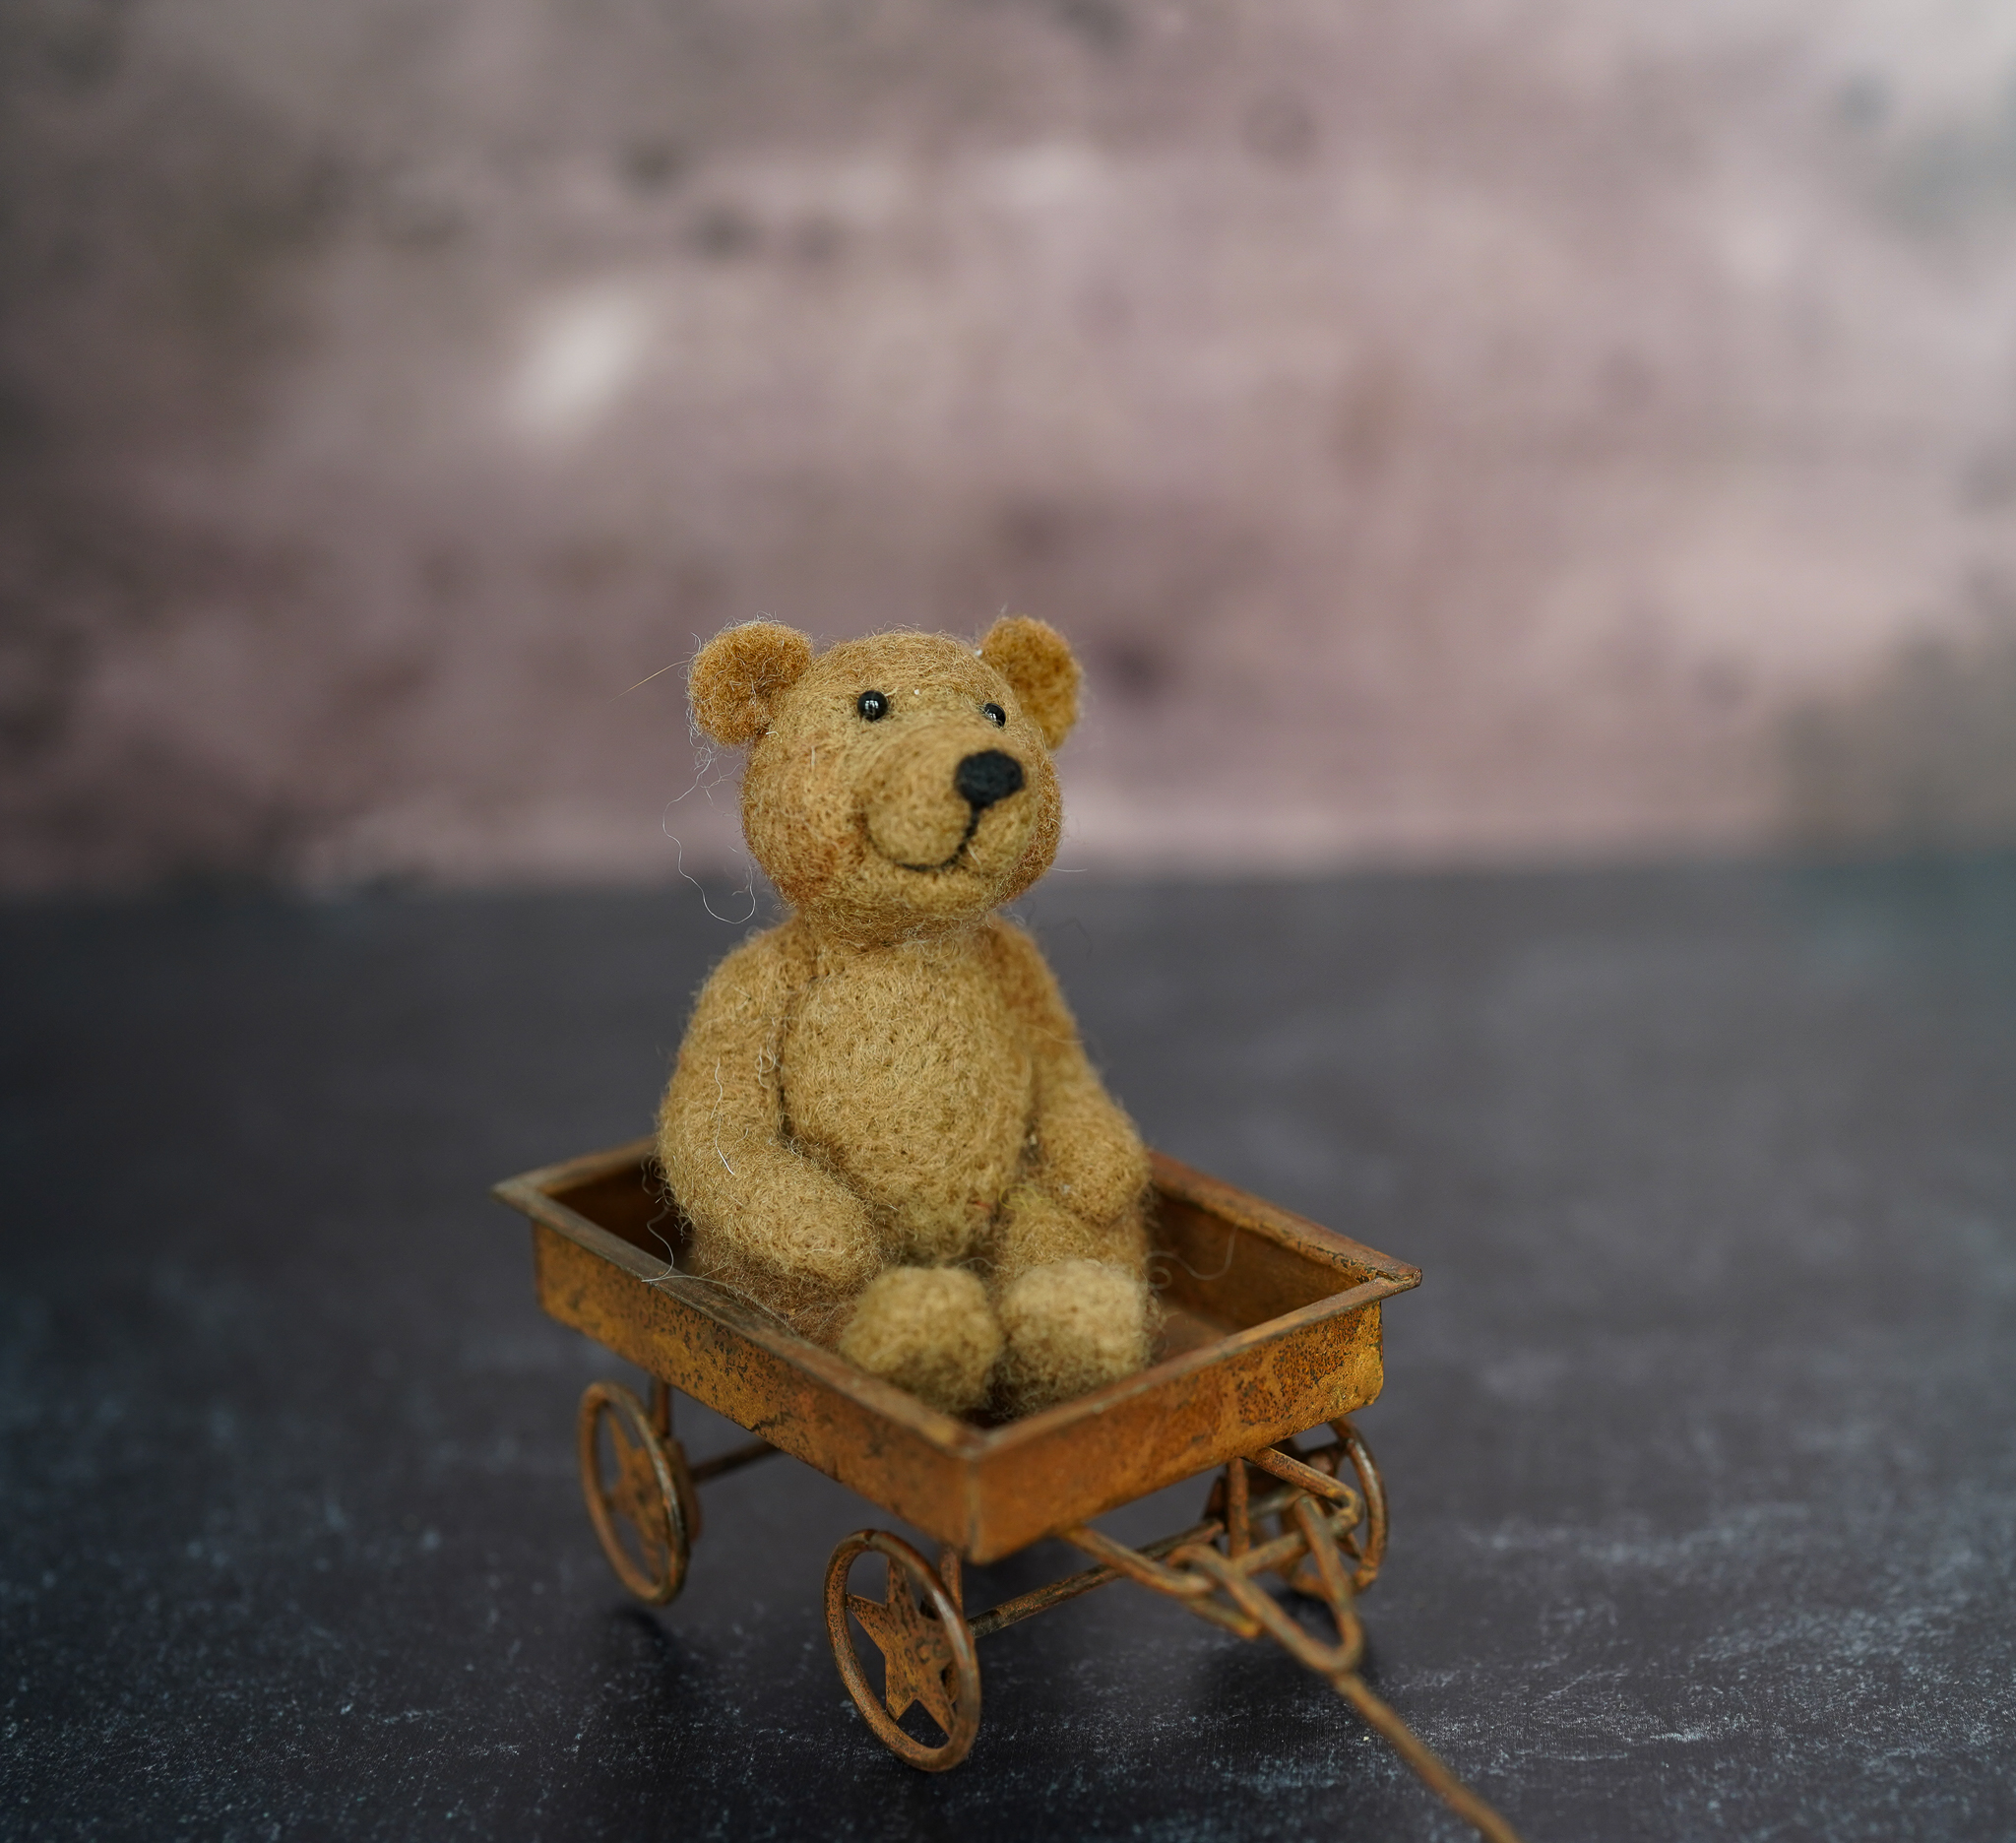 Needle Felting Teddy Bears For Beginners — Material Needs